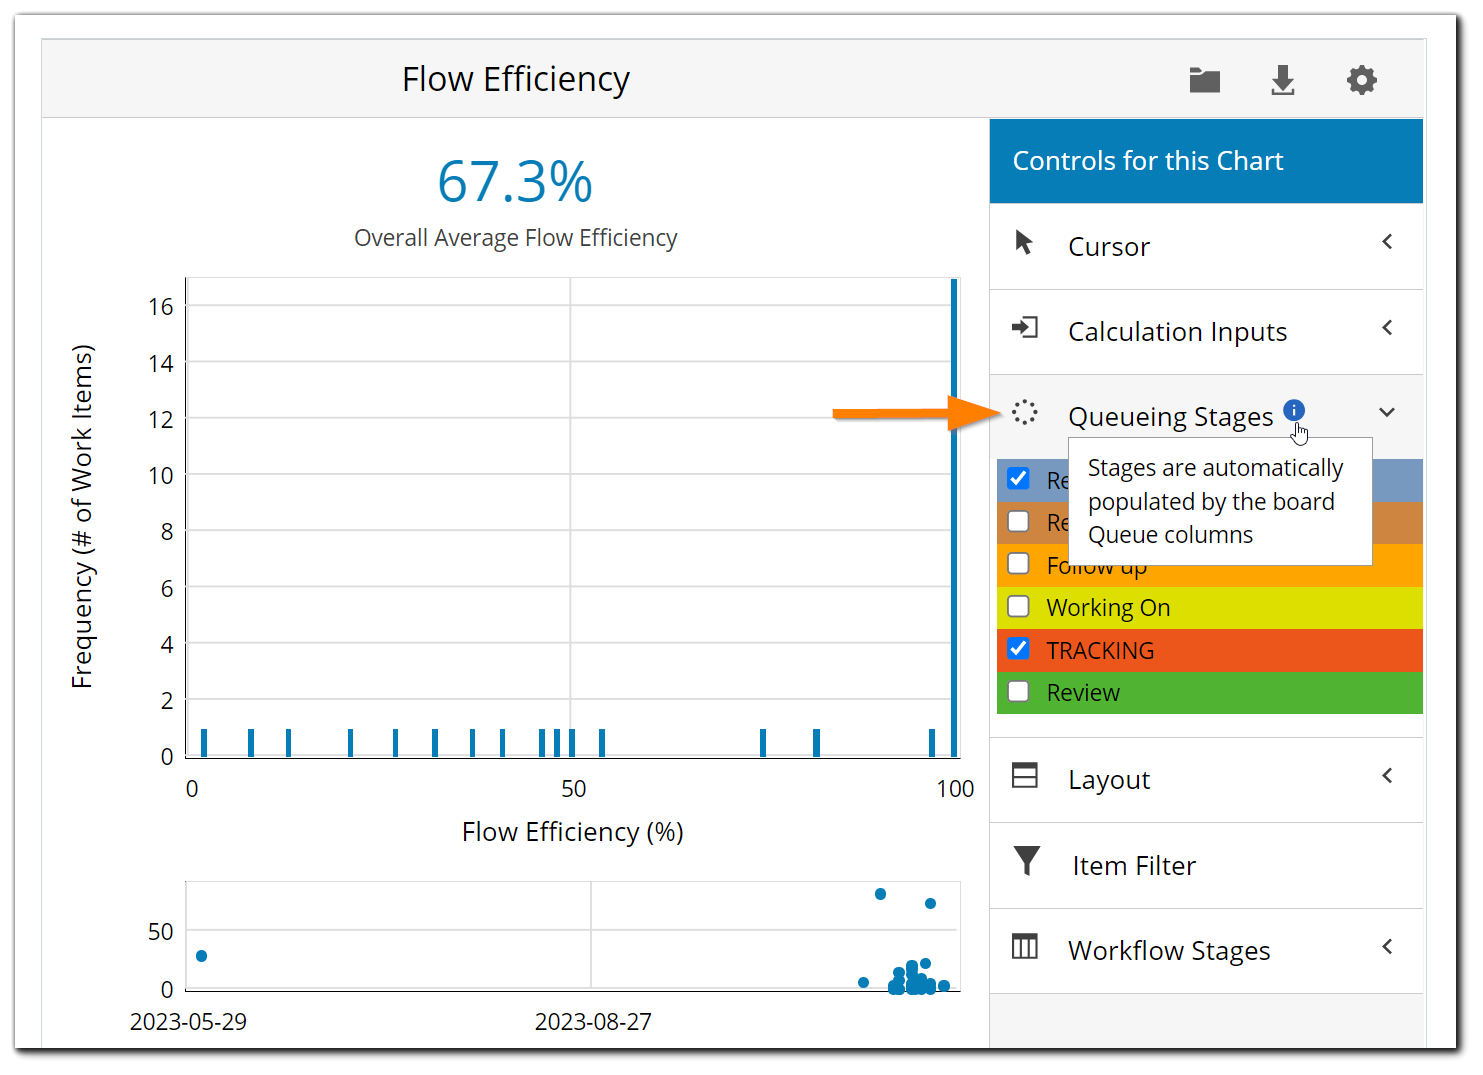 flow-efficiency-chart-controls.png